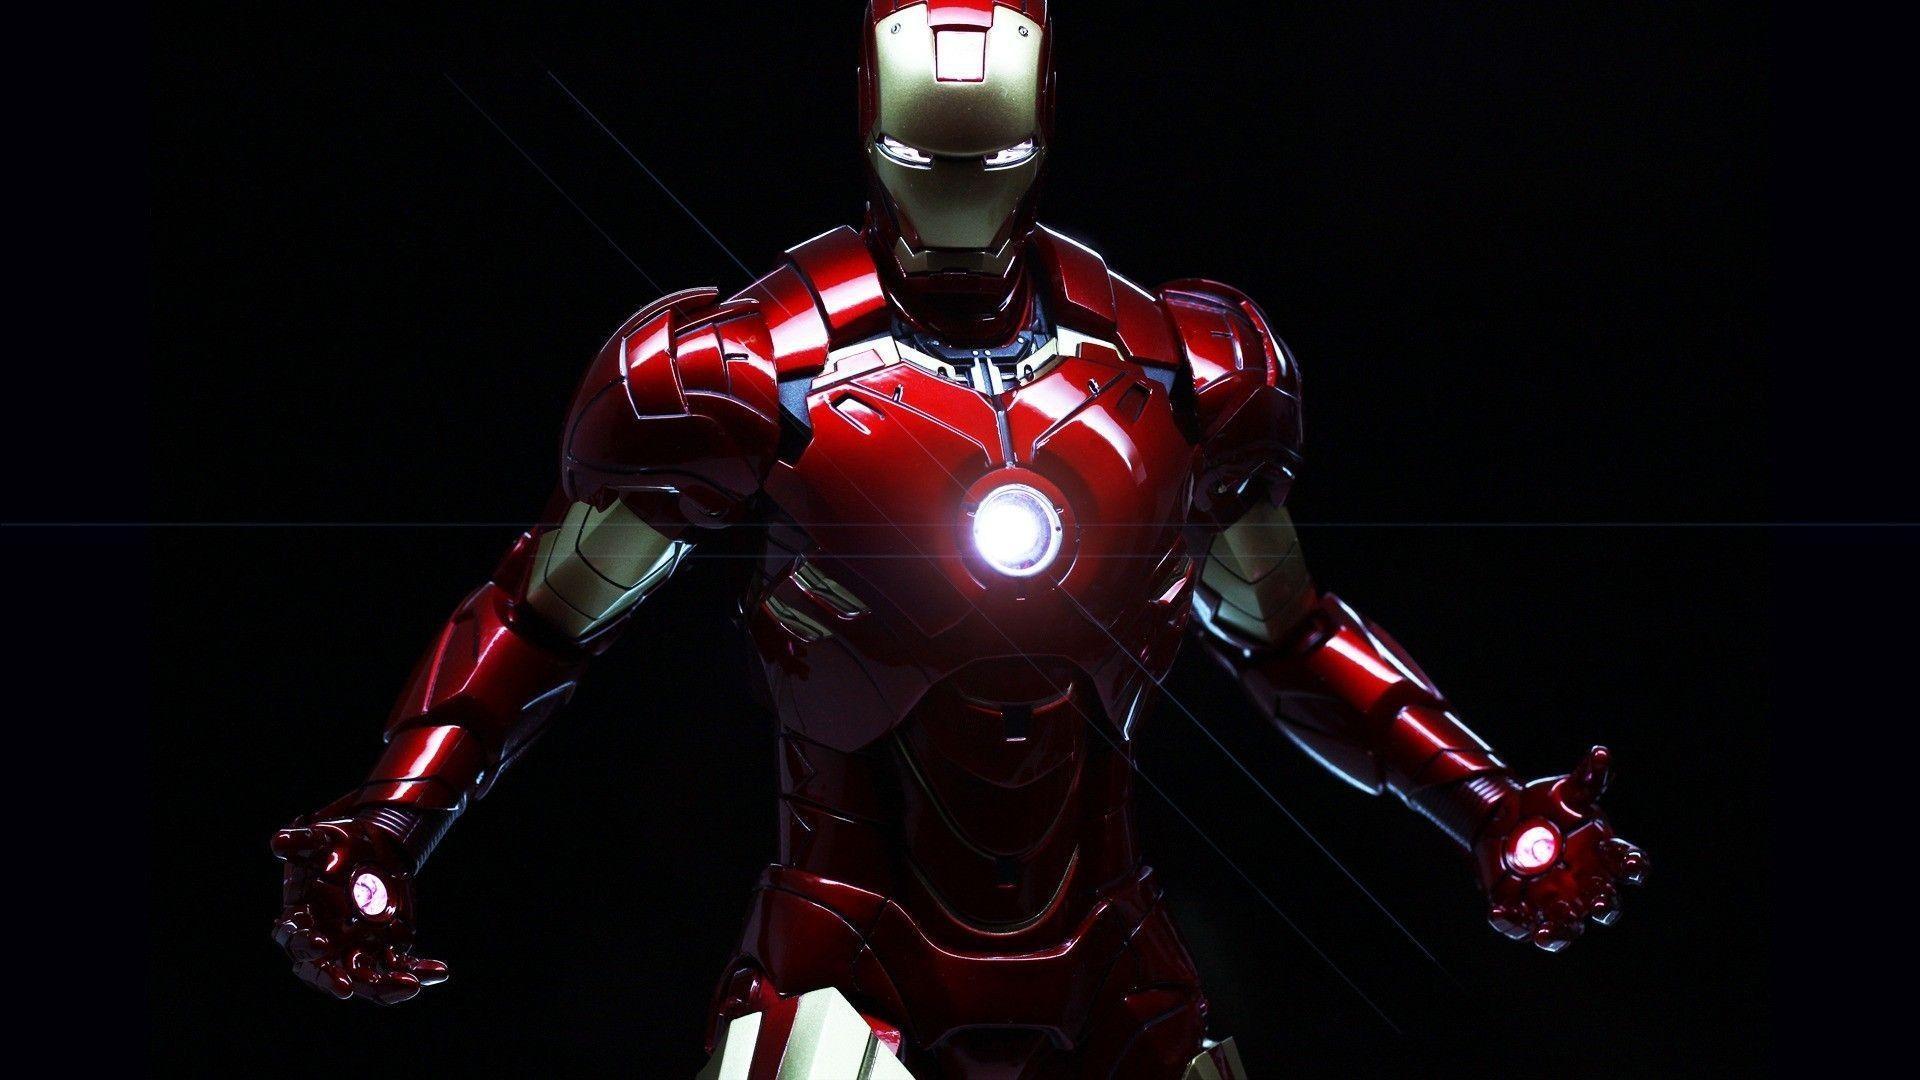 Iron Man Suit wallpaper / Wallpaper as